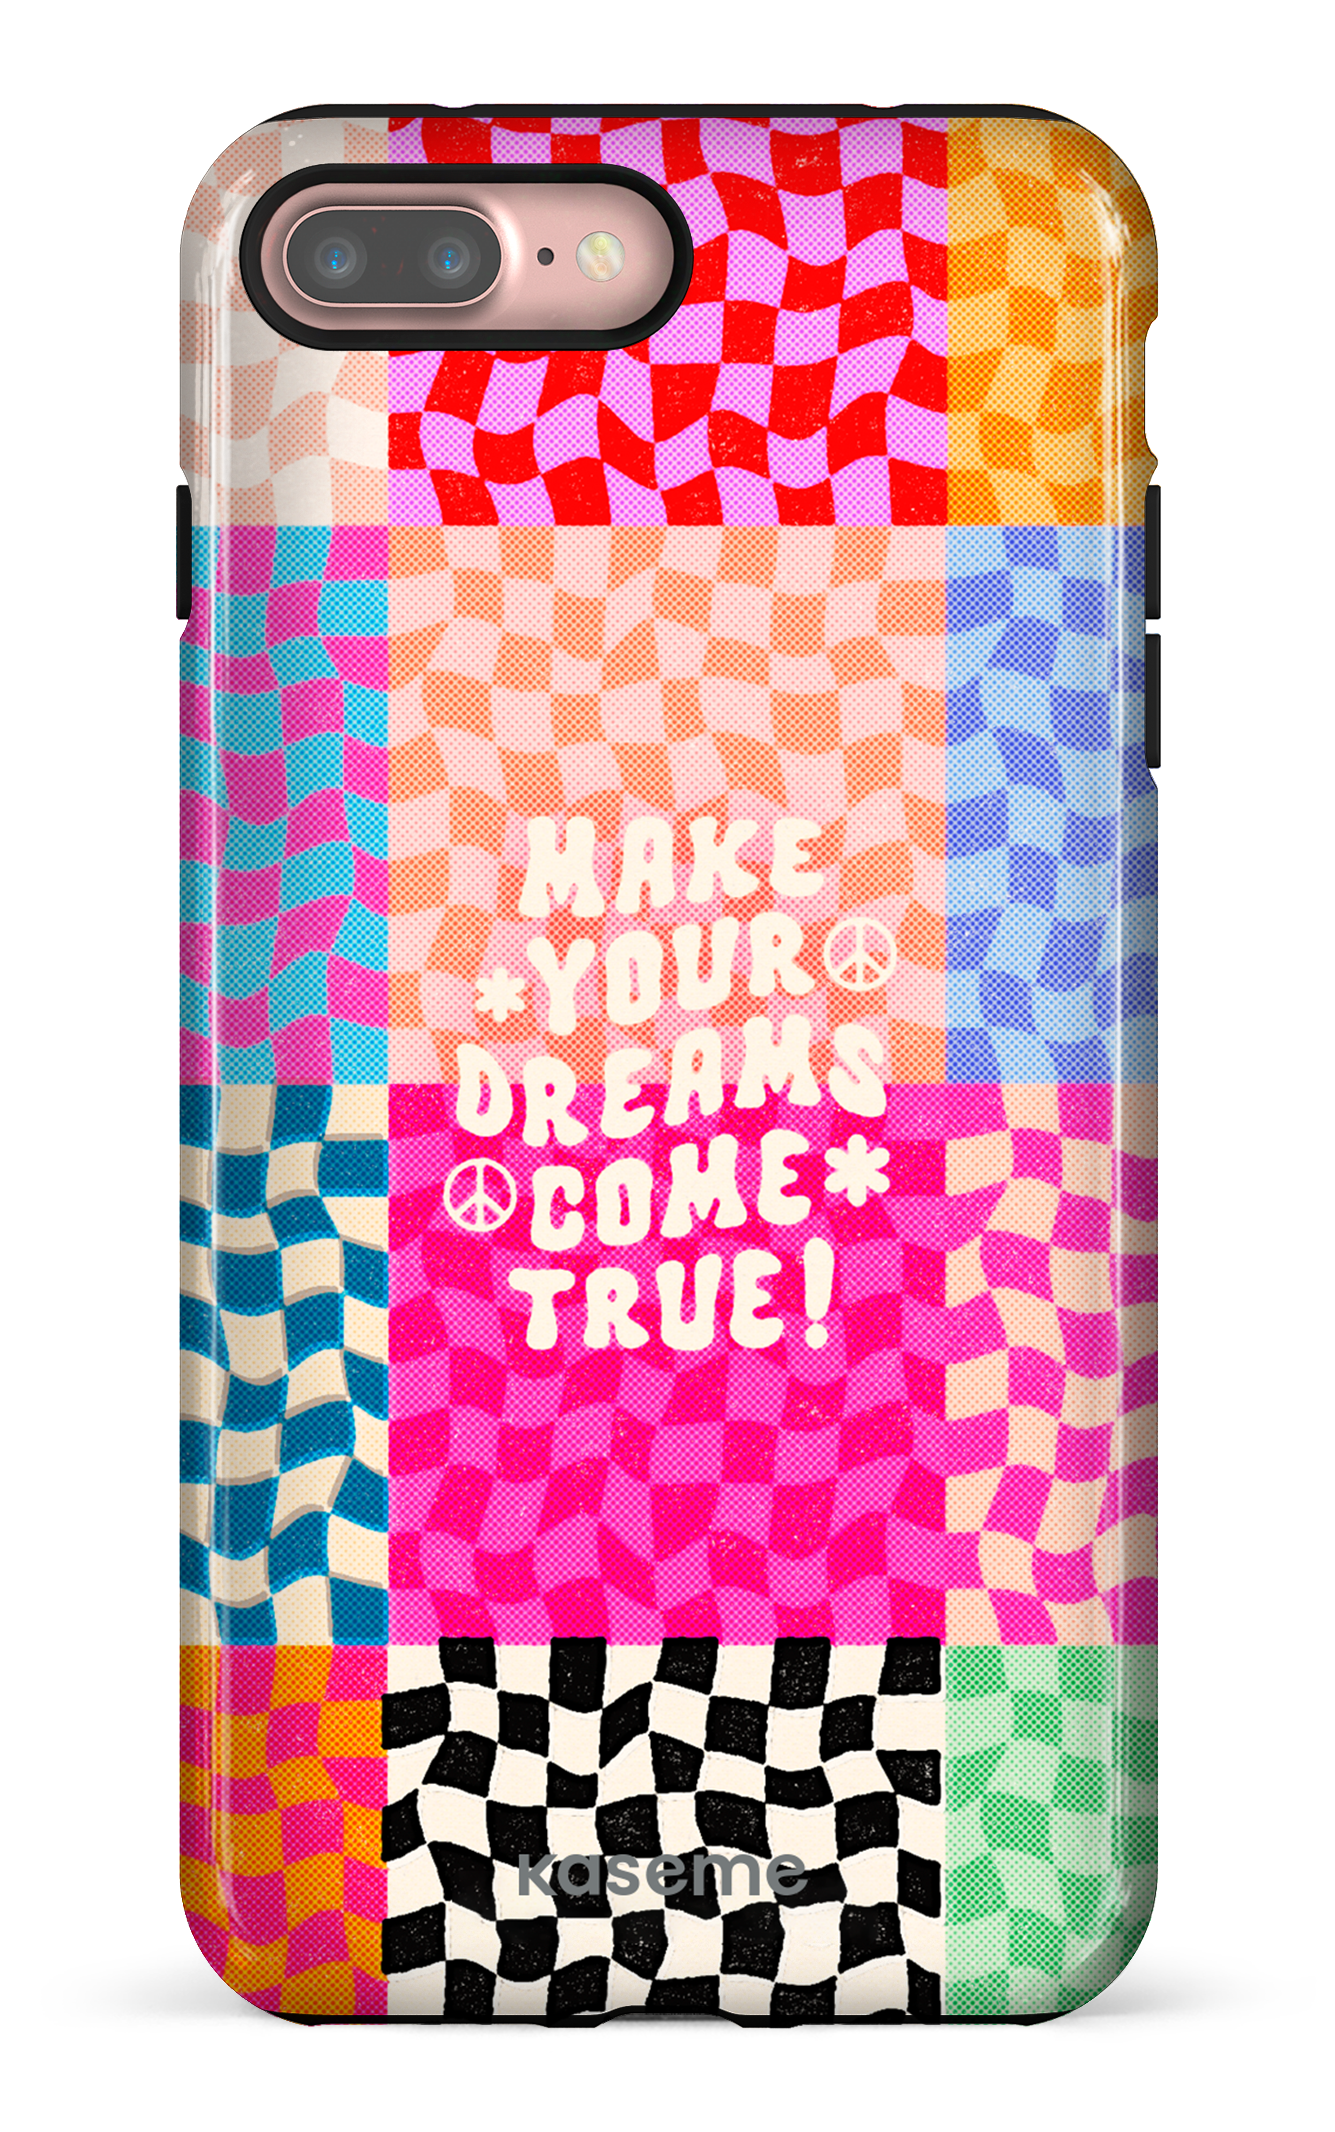 Dreamers - iPhone 7 Plus